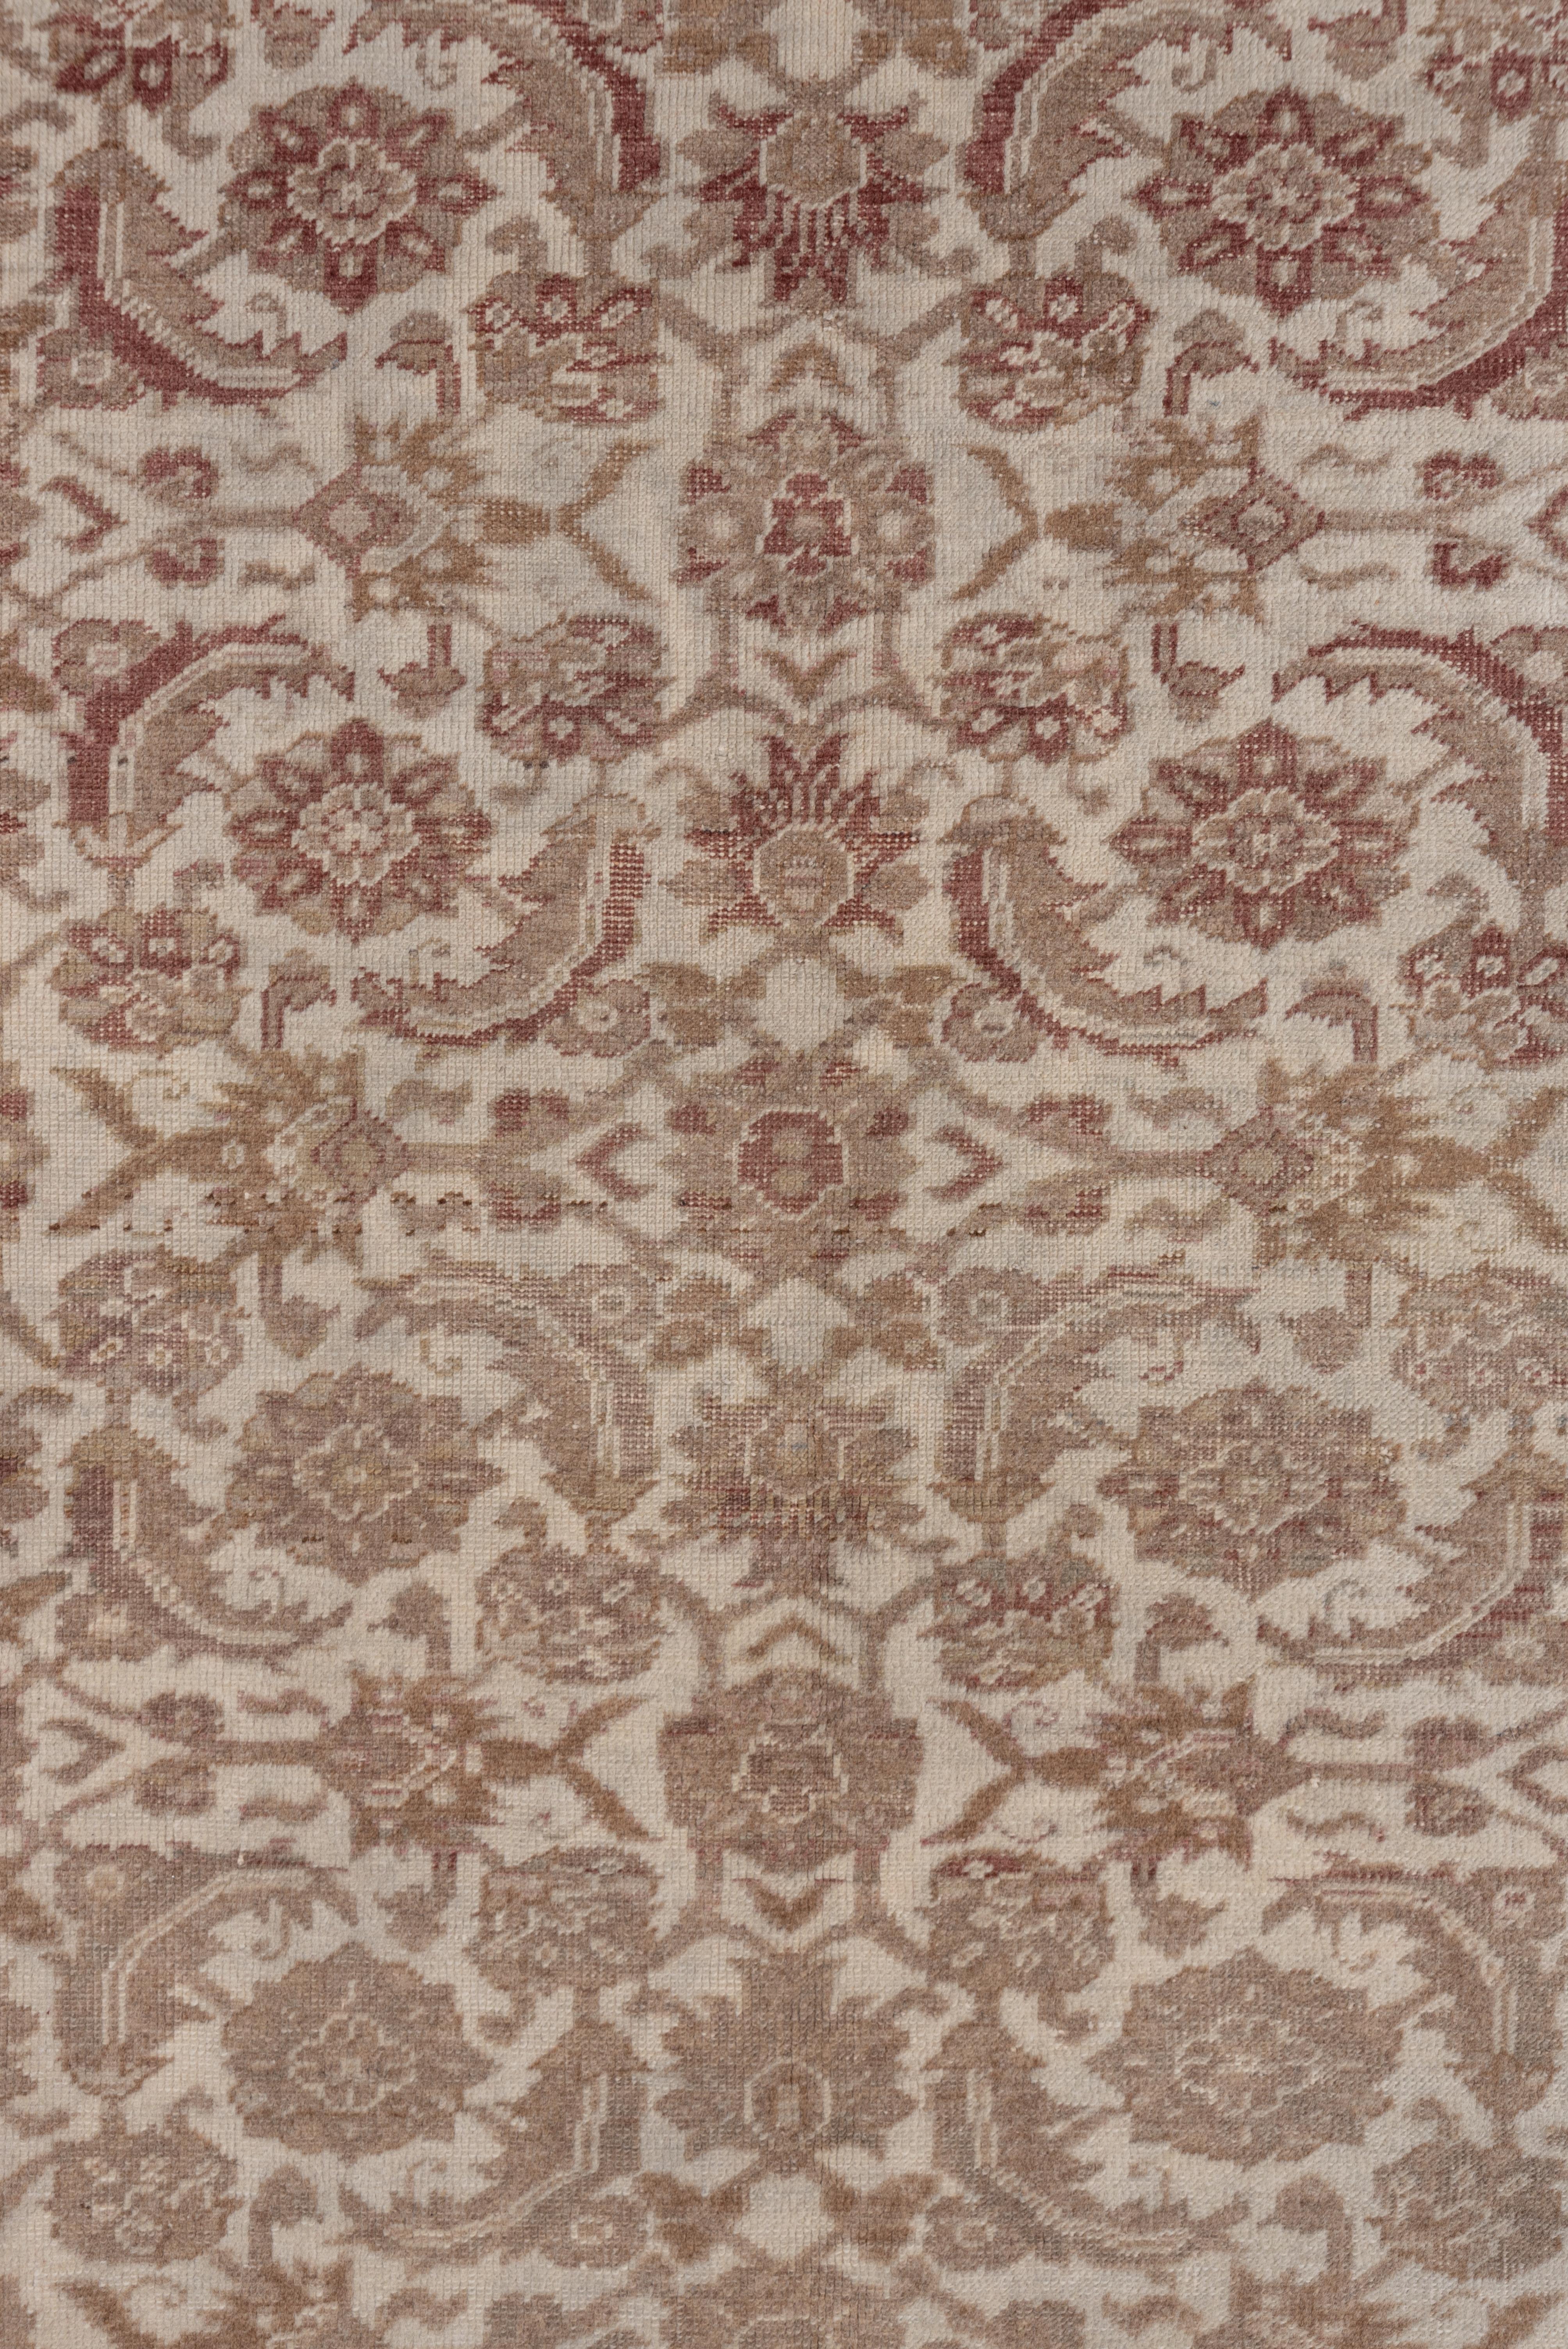 Turkish Antique Kaisary Carpet, Neutral Palette, circa 1920s